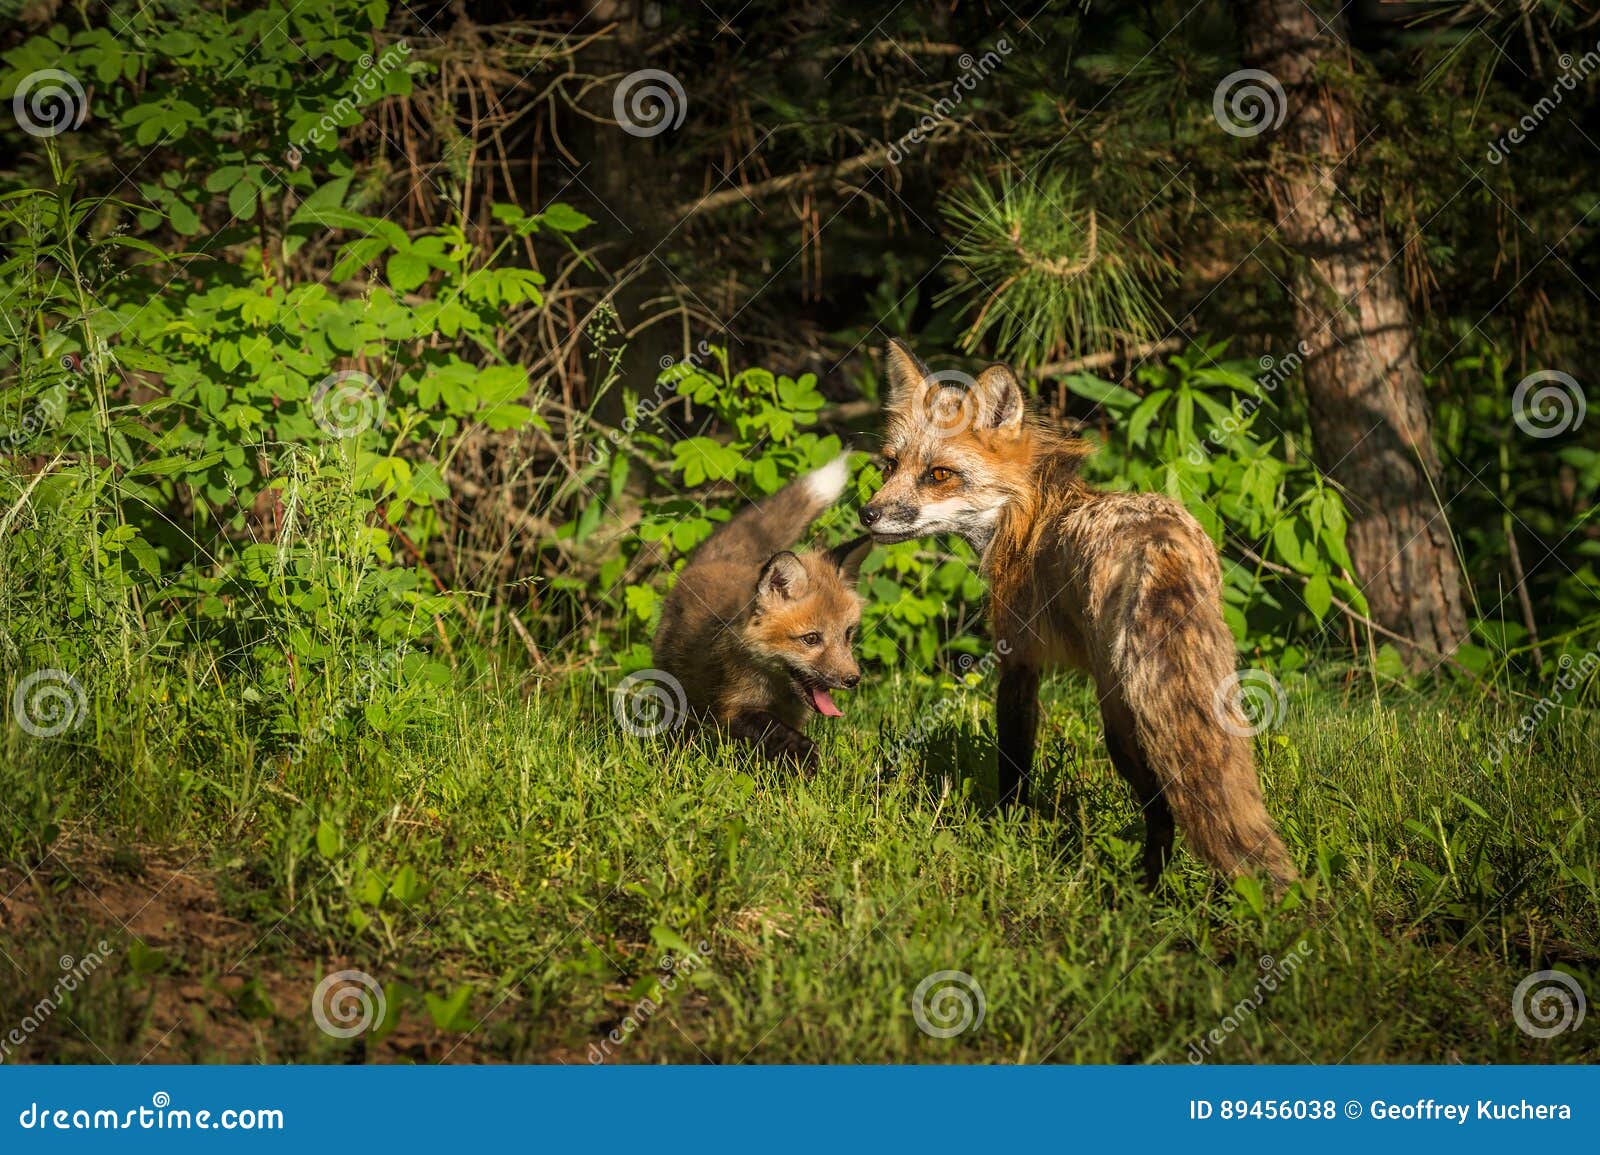 red fox vixen vulpes vulpes looks back with kit